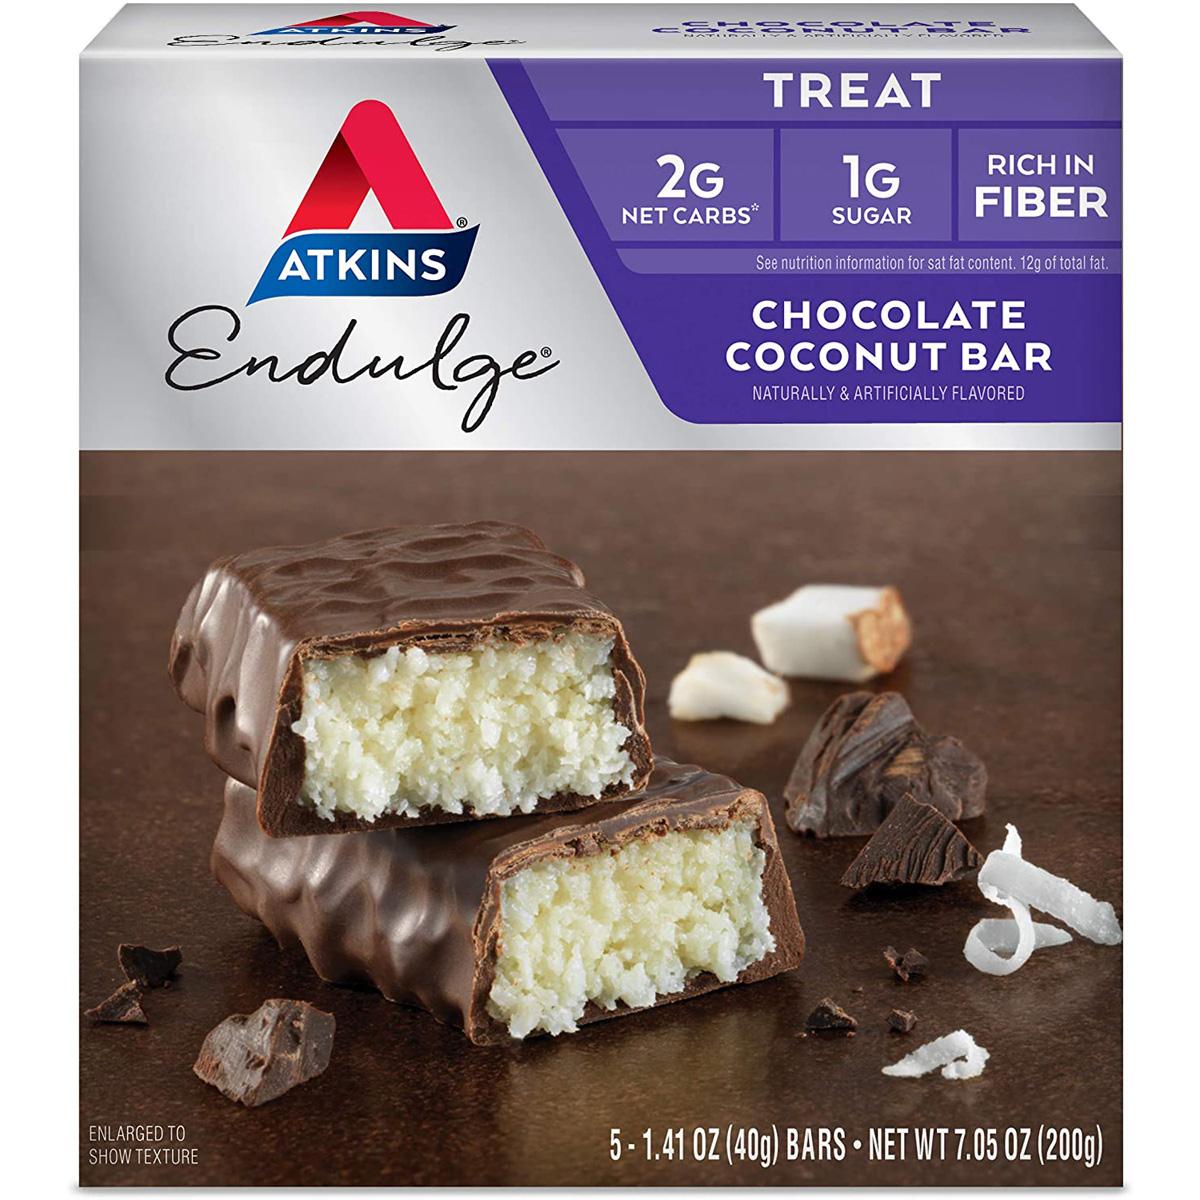 5 Atkins Endulge Treat Chocolate Coconut Dessert Bar for $5.02 Shipped